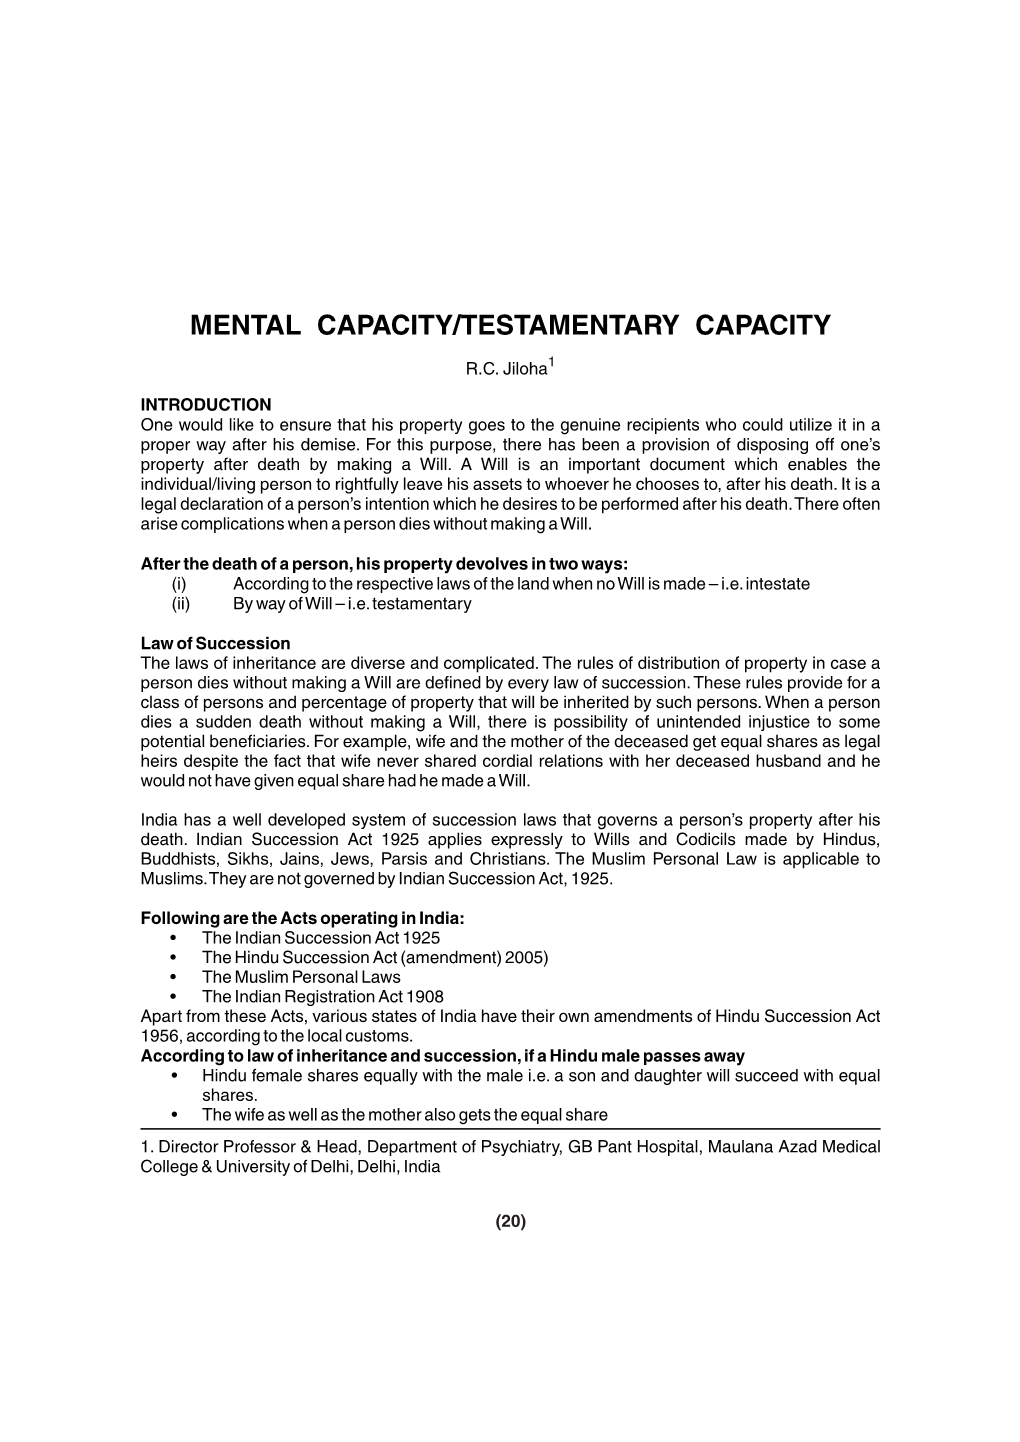 Article 9 (Mental Capacity Testamentary Capacity)